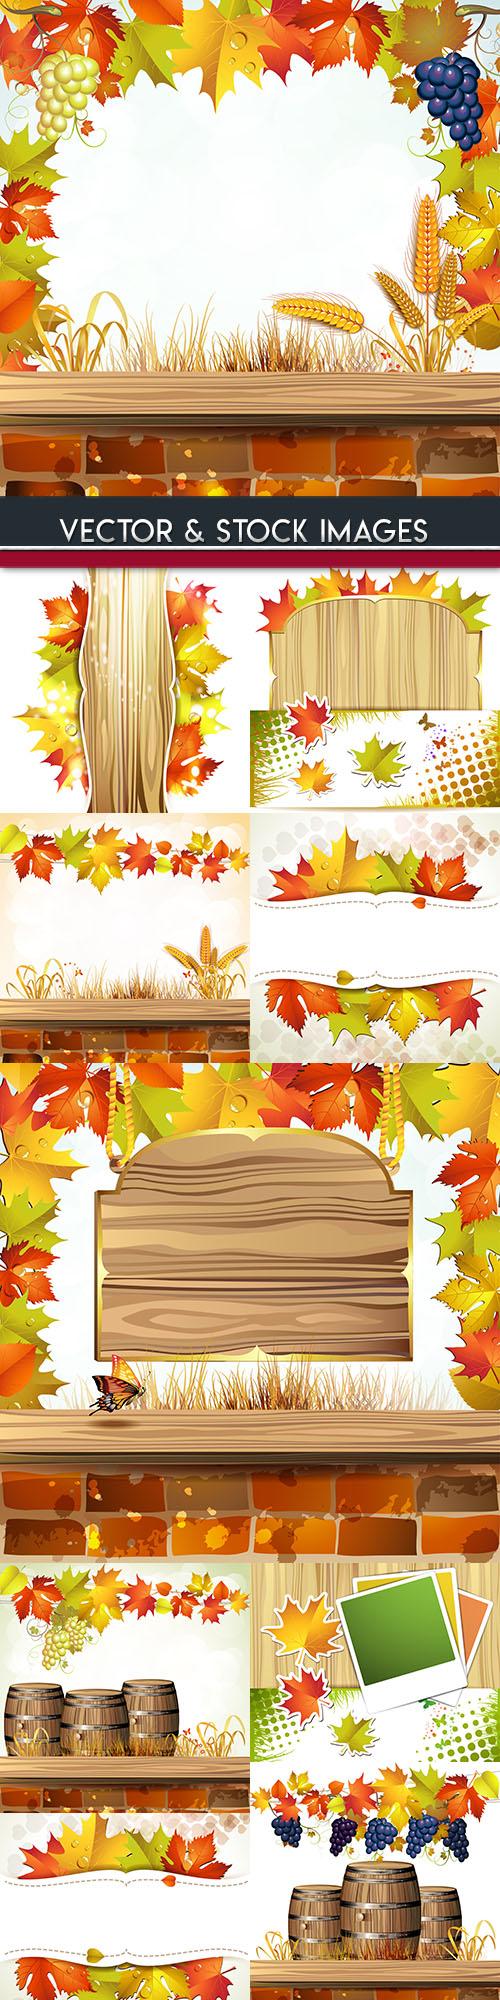 Autumn foliage and grape bunches illustration